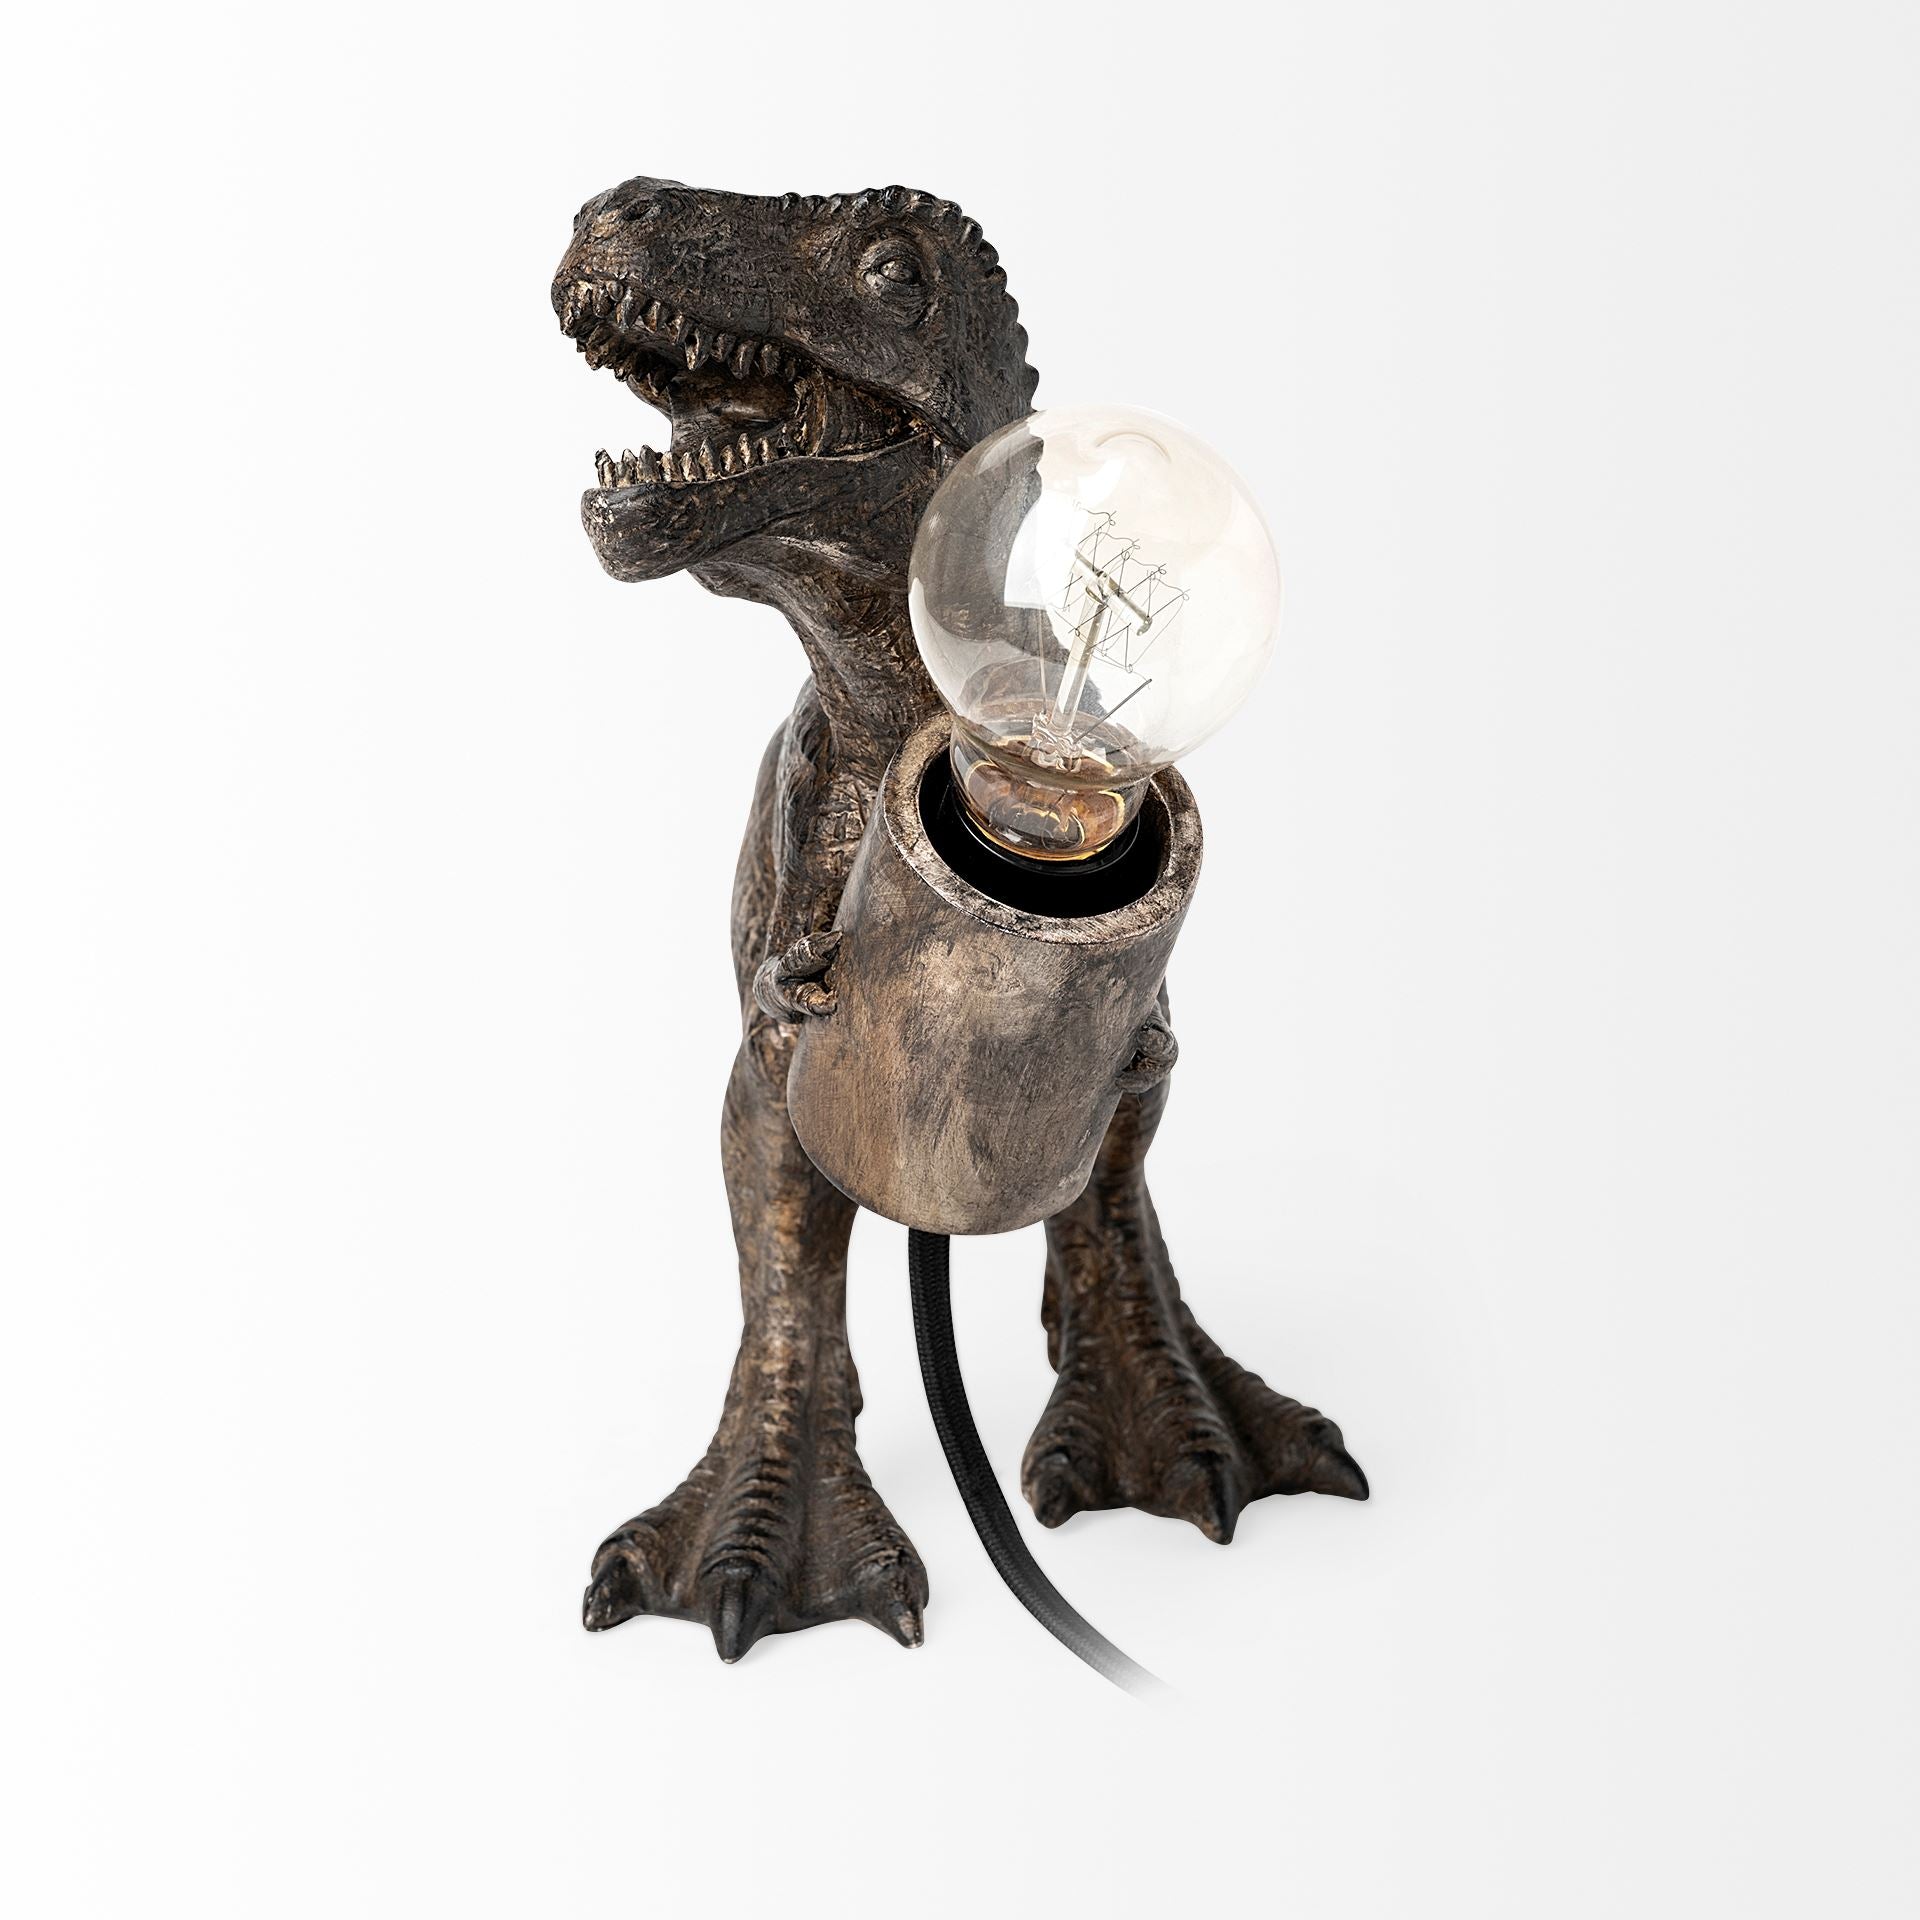 Raptor Table Lamp